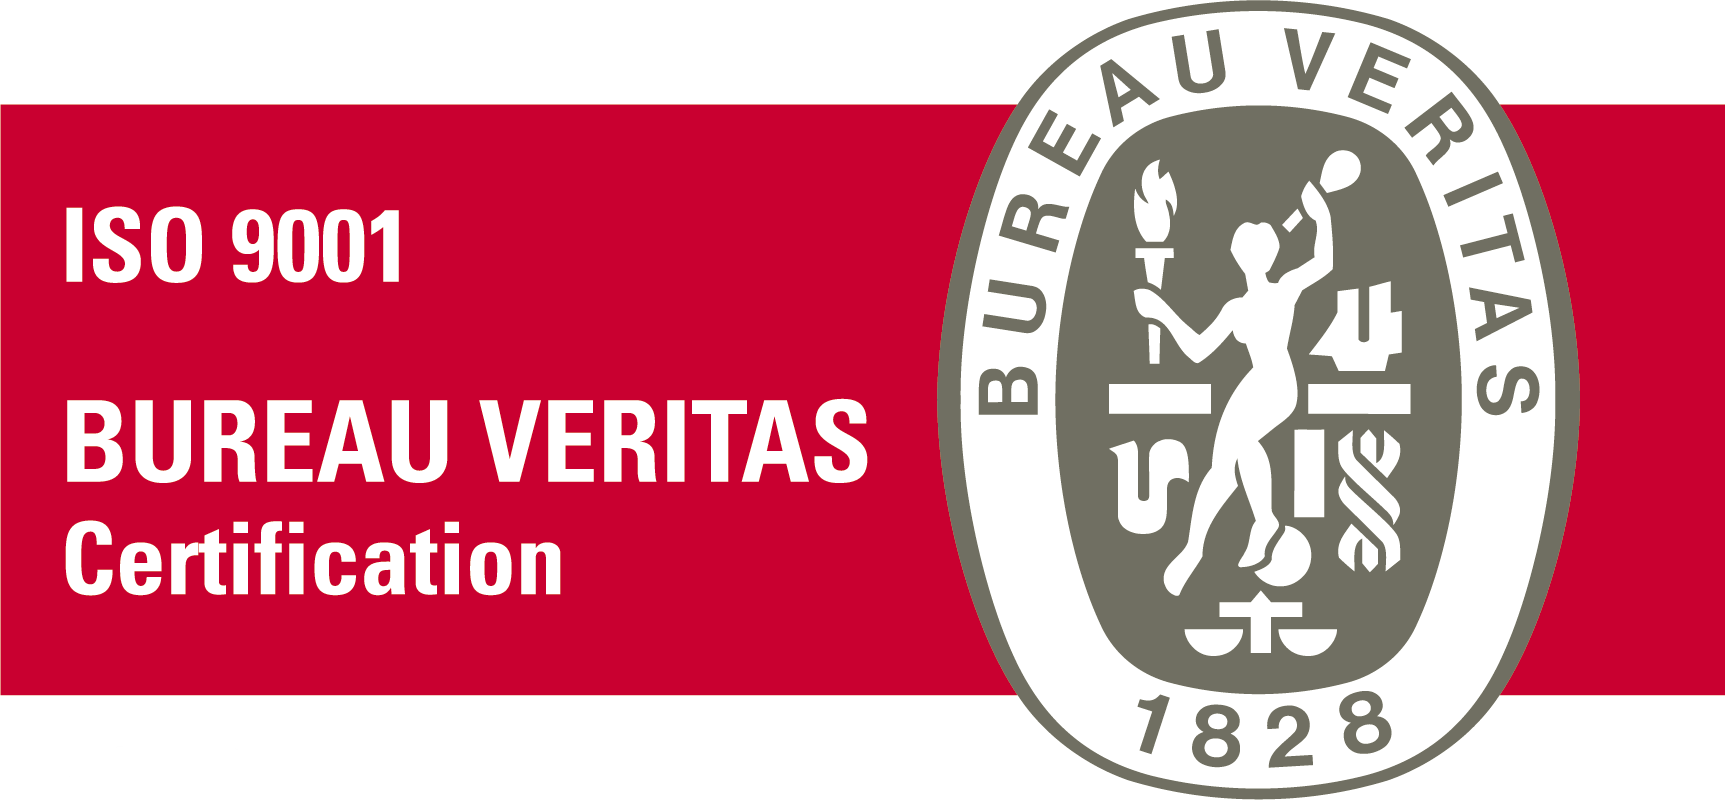 Certification iso 9001 - Bureau Veritas certification